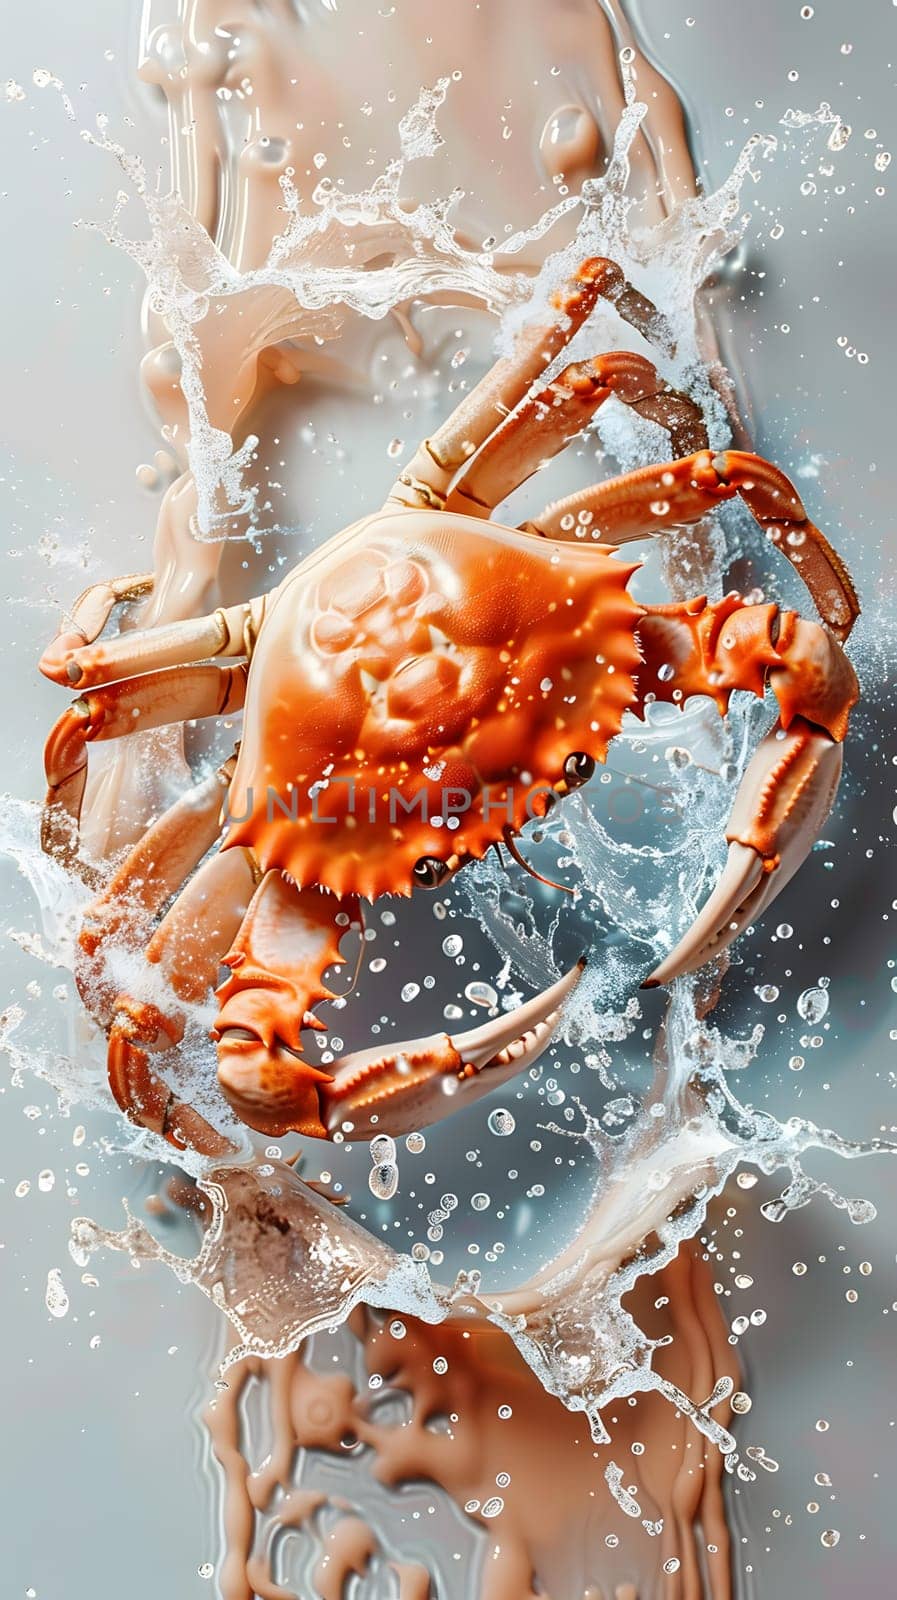 A Decapod crab, a terrestrial arthropod species, is frolicking in a stream of water. This crustacean is enjoying its aquatic habitat, showcasing its playful behavior